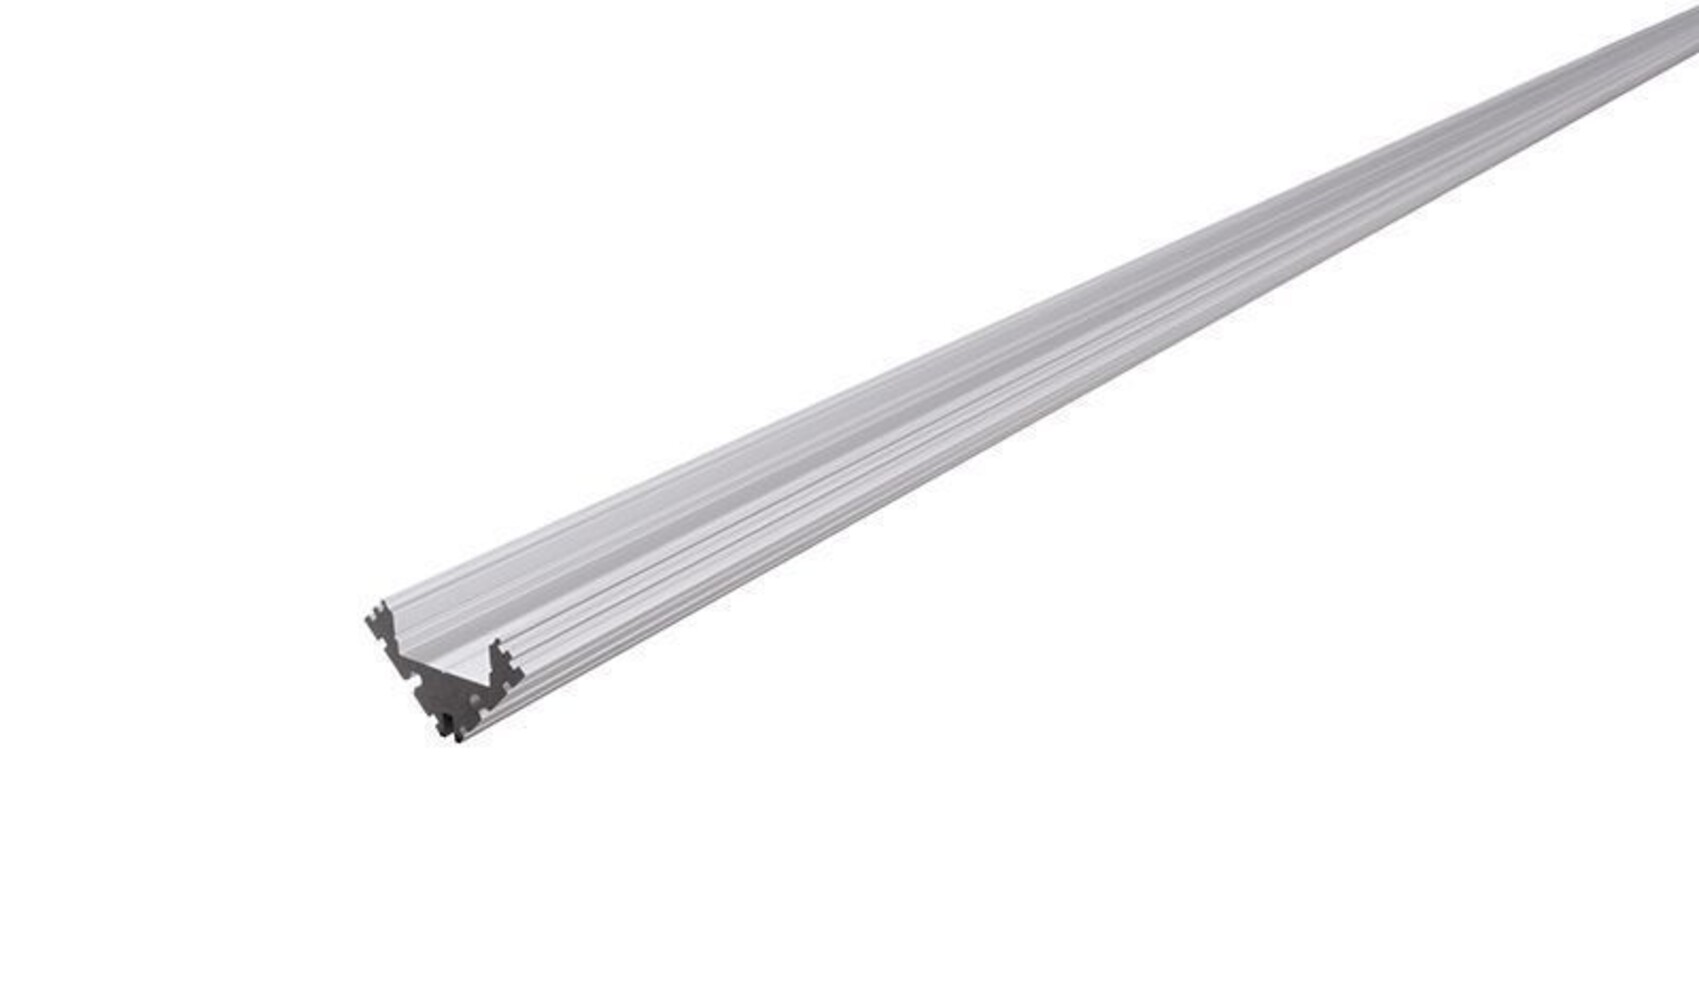 Deko-Light LED Profil in elegant silber matt und eloxiert, ideal für 12-13.3 mm LED Stripes